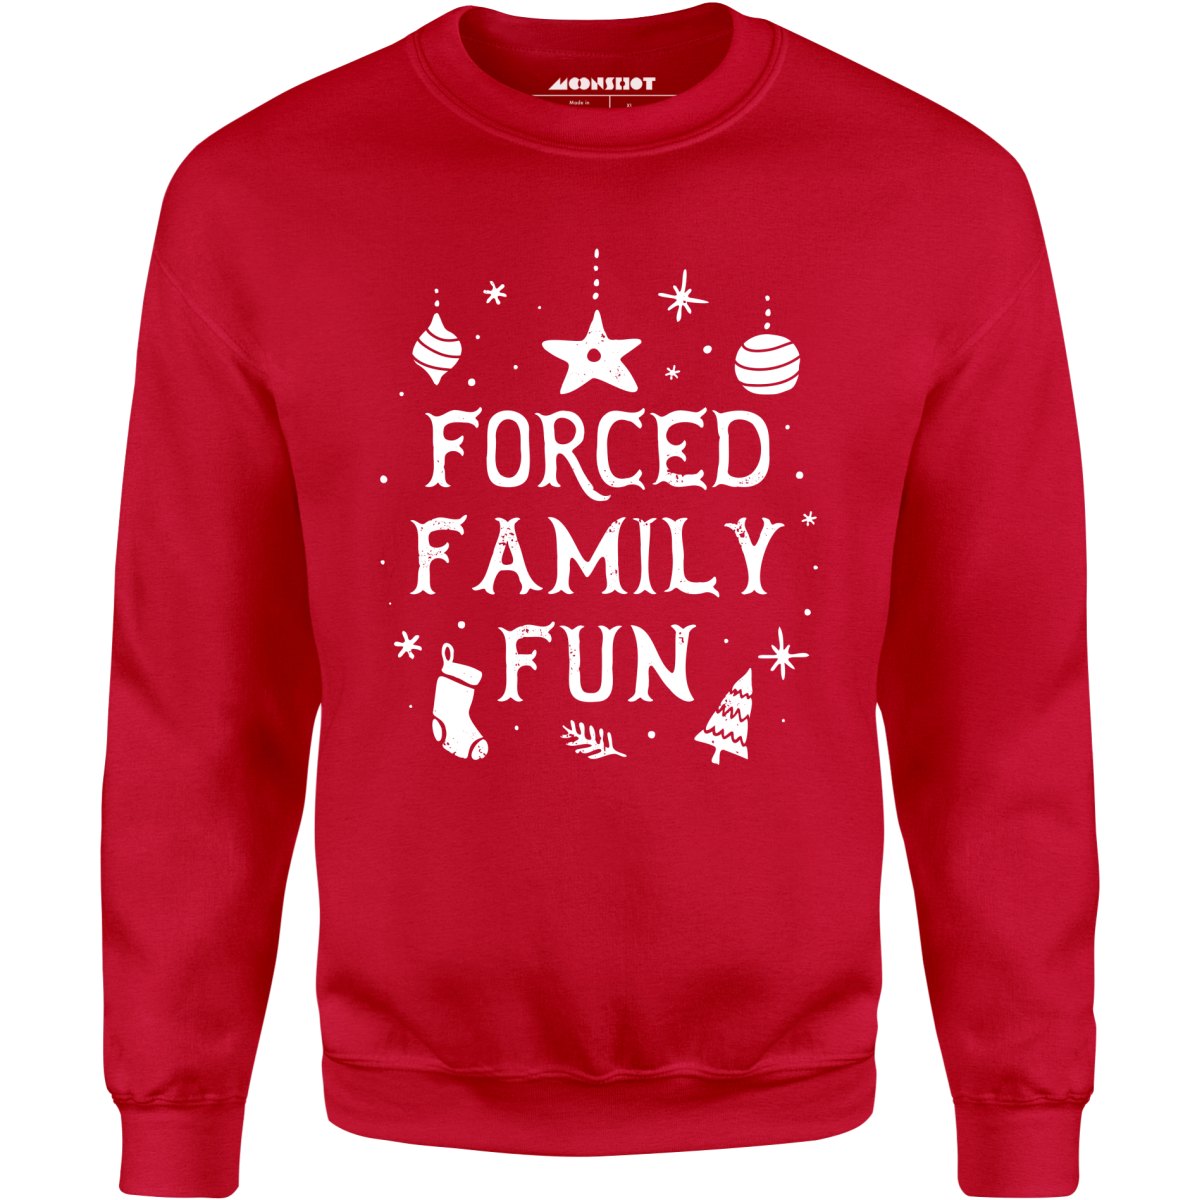 Forced Family Fun - Unisex Sweatshirt